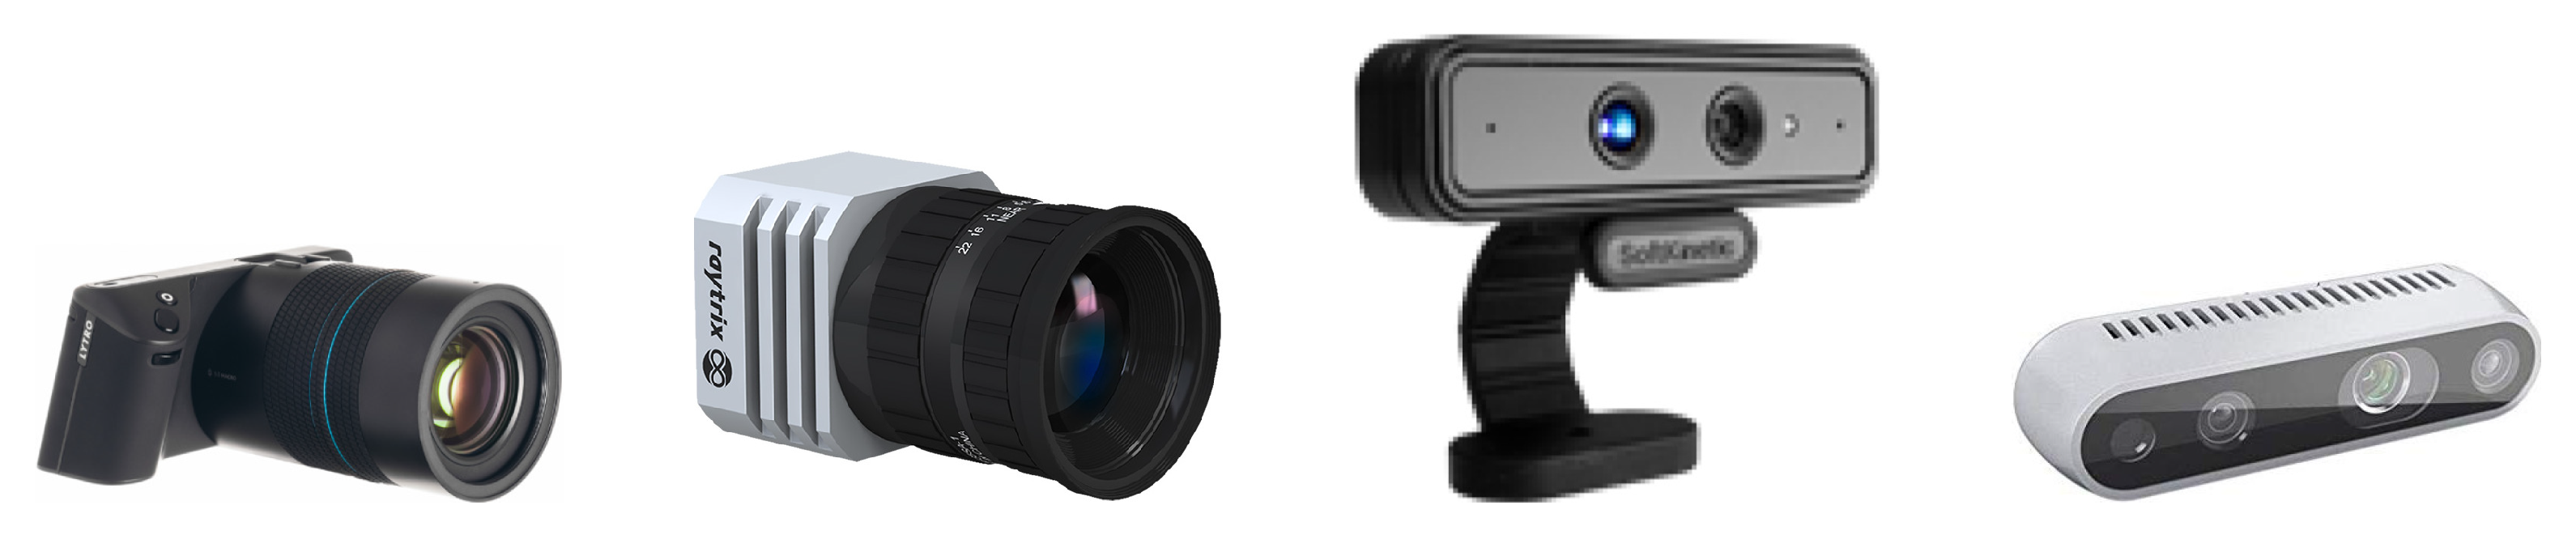 a) Lytro Illum camera. (b) Lab-designed camera. (c) Raytrix camera.